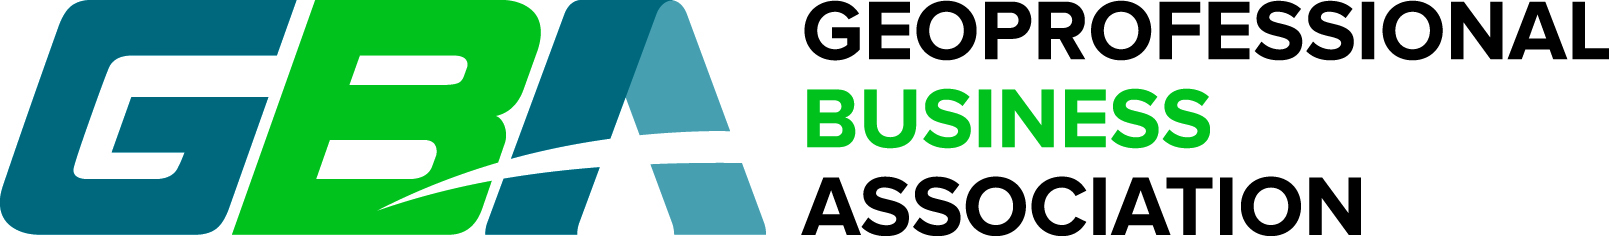 Geoprofessional Business Association (GBA)